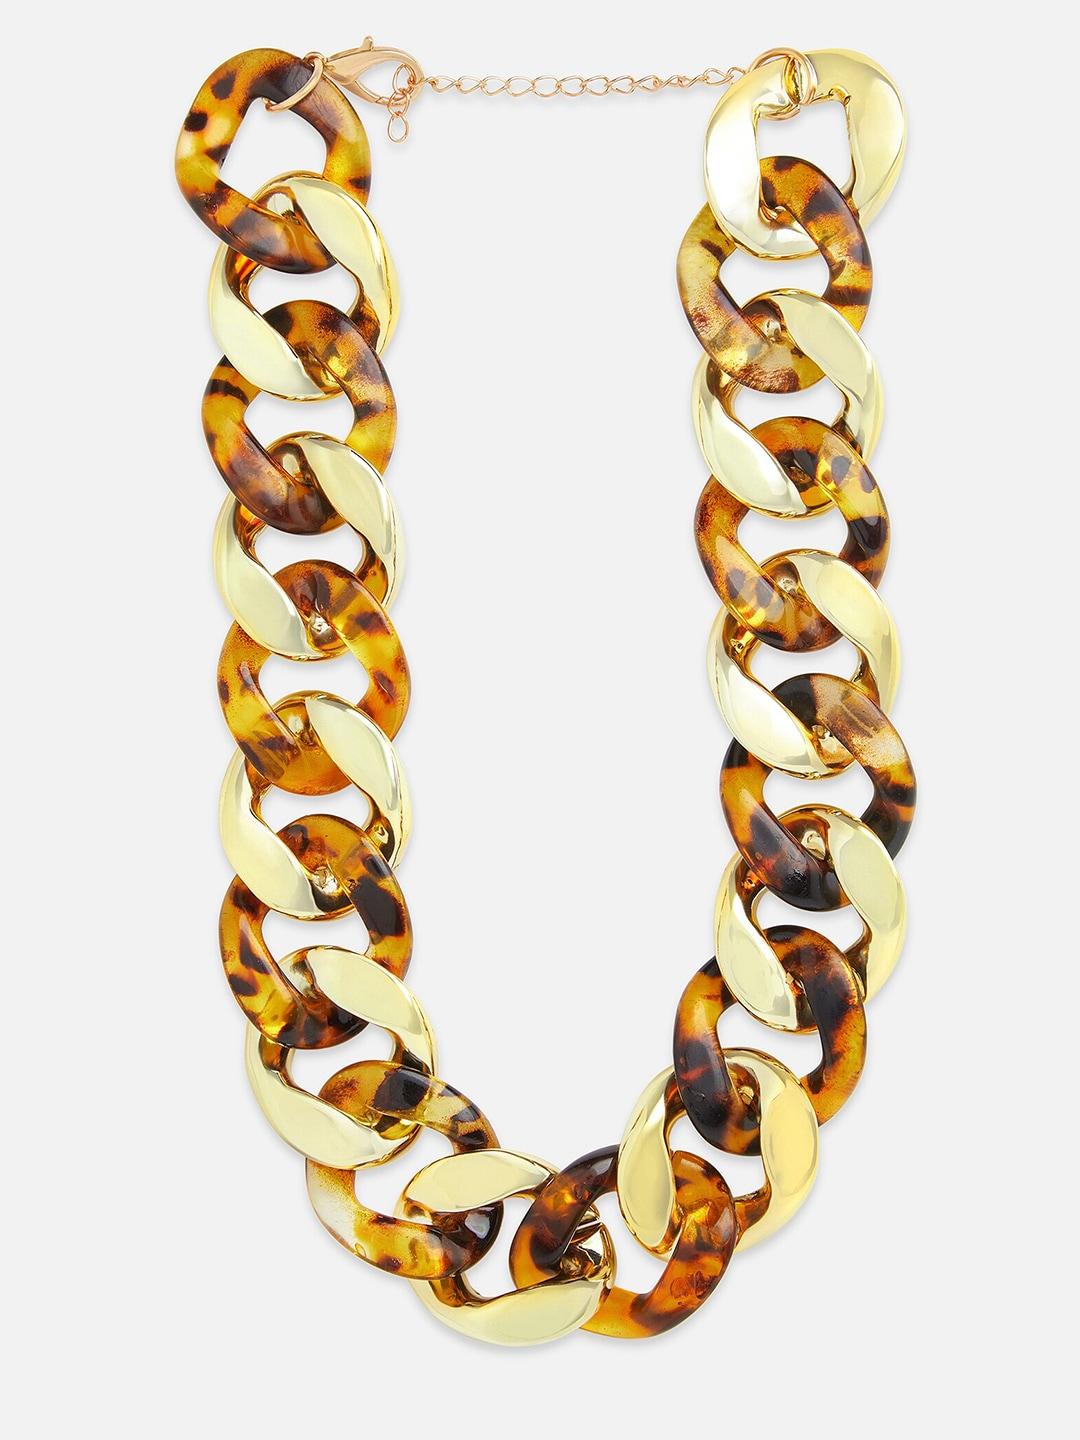 20dresses women gold & brown choker necklace